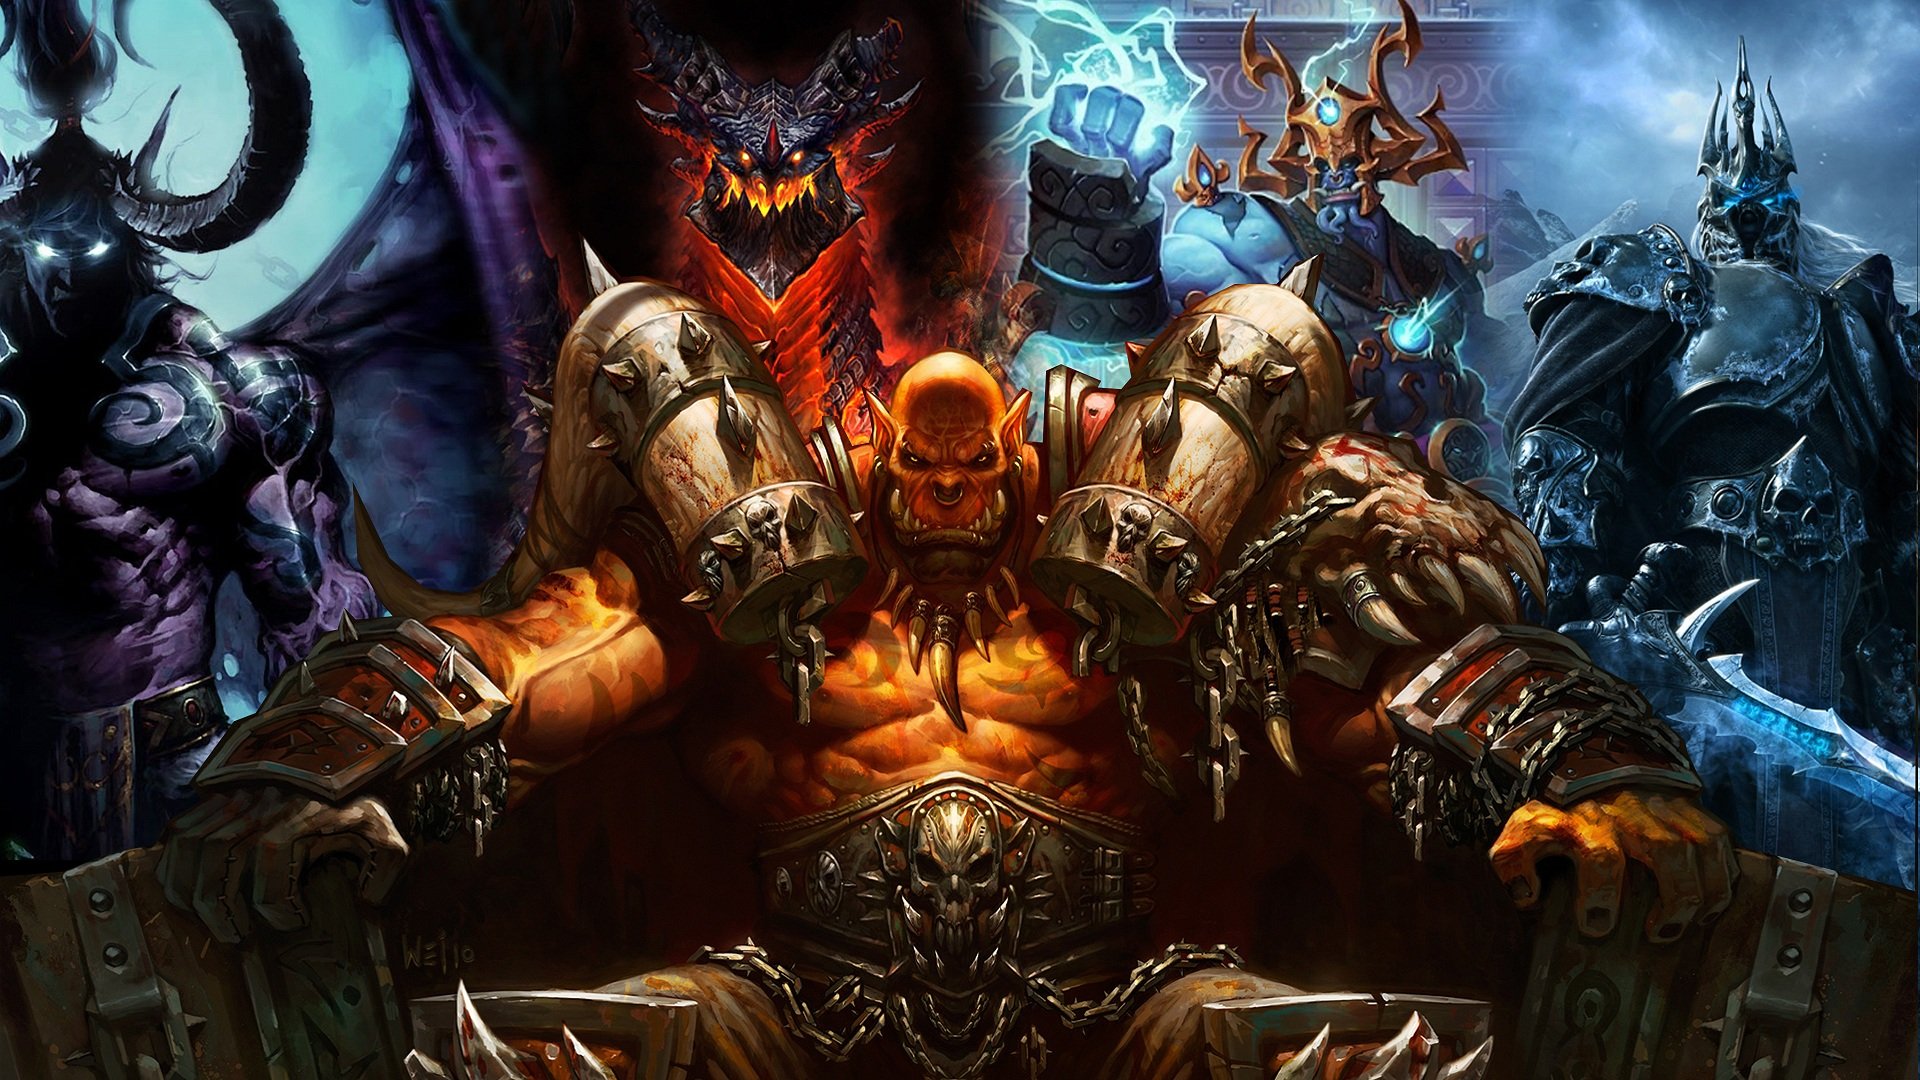 world, Warcraft, Warlords, Draenor, Fantasy, Wow Wallpaper